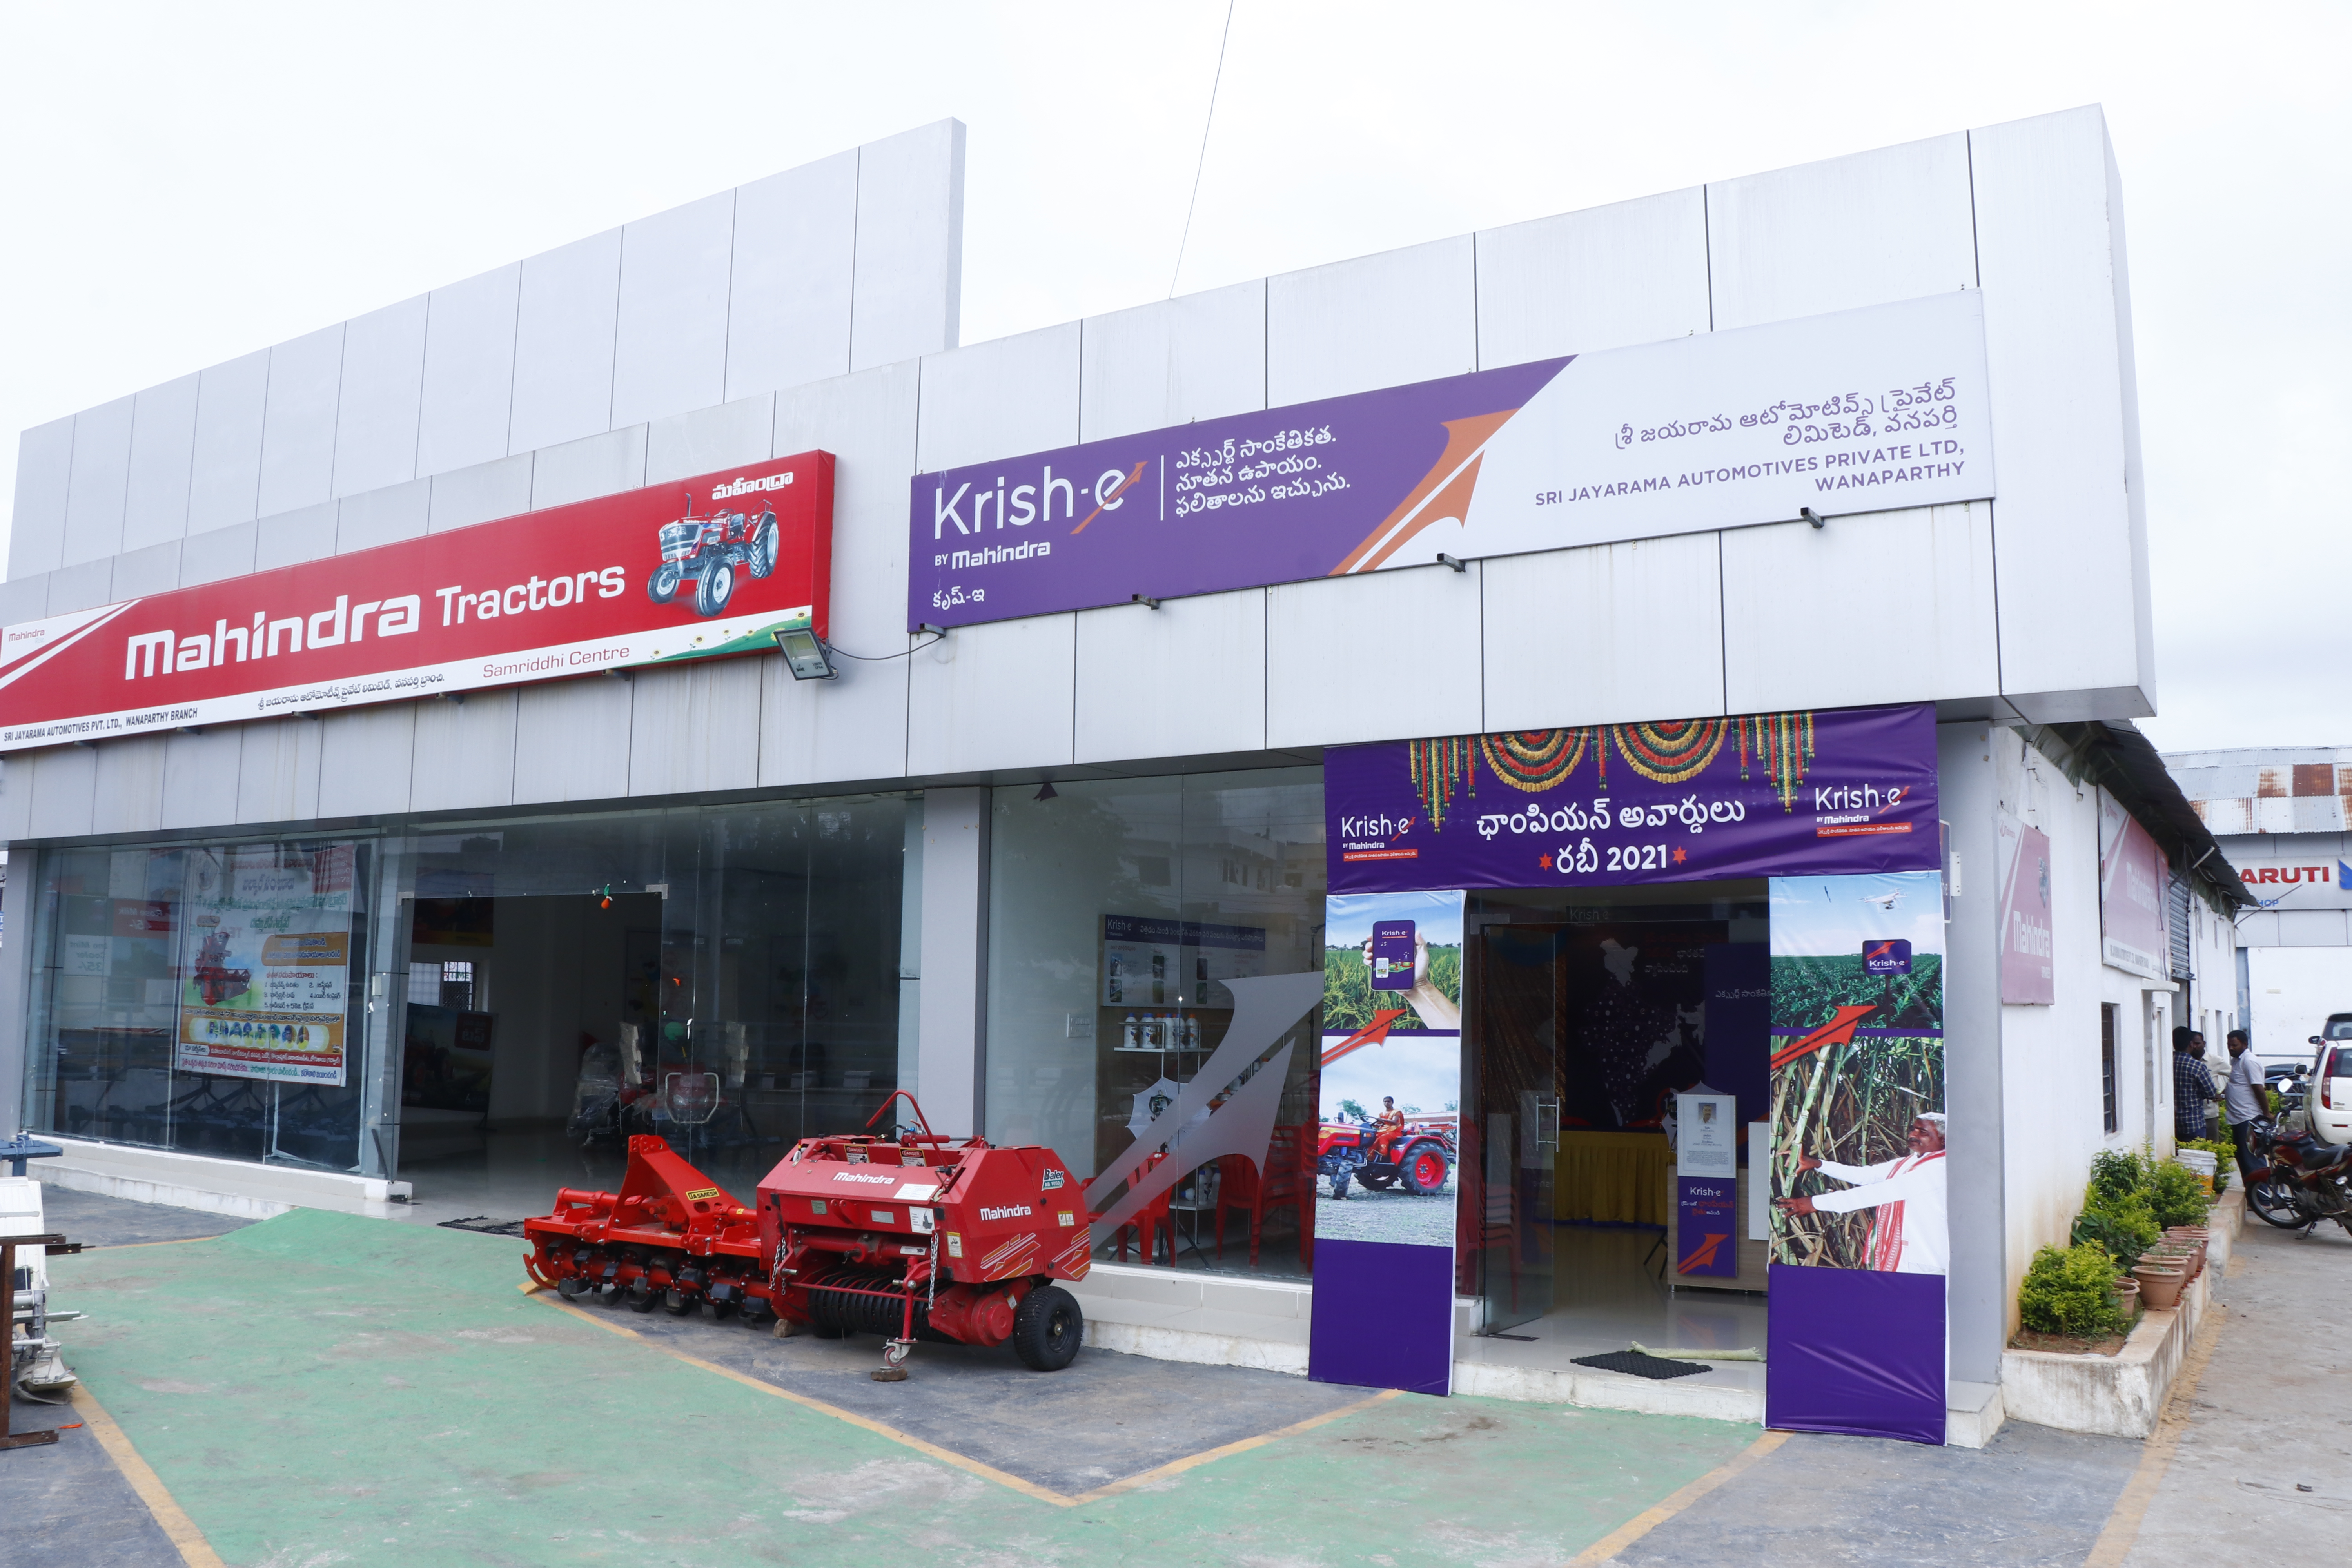 Krish-e – Farm Equipment Sector, M&M Ltd.